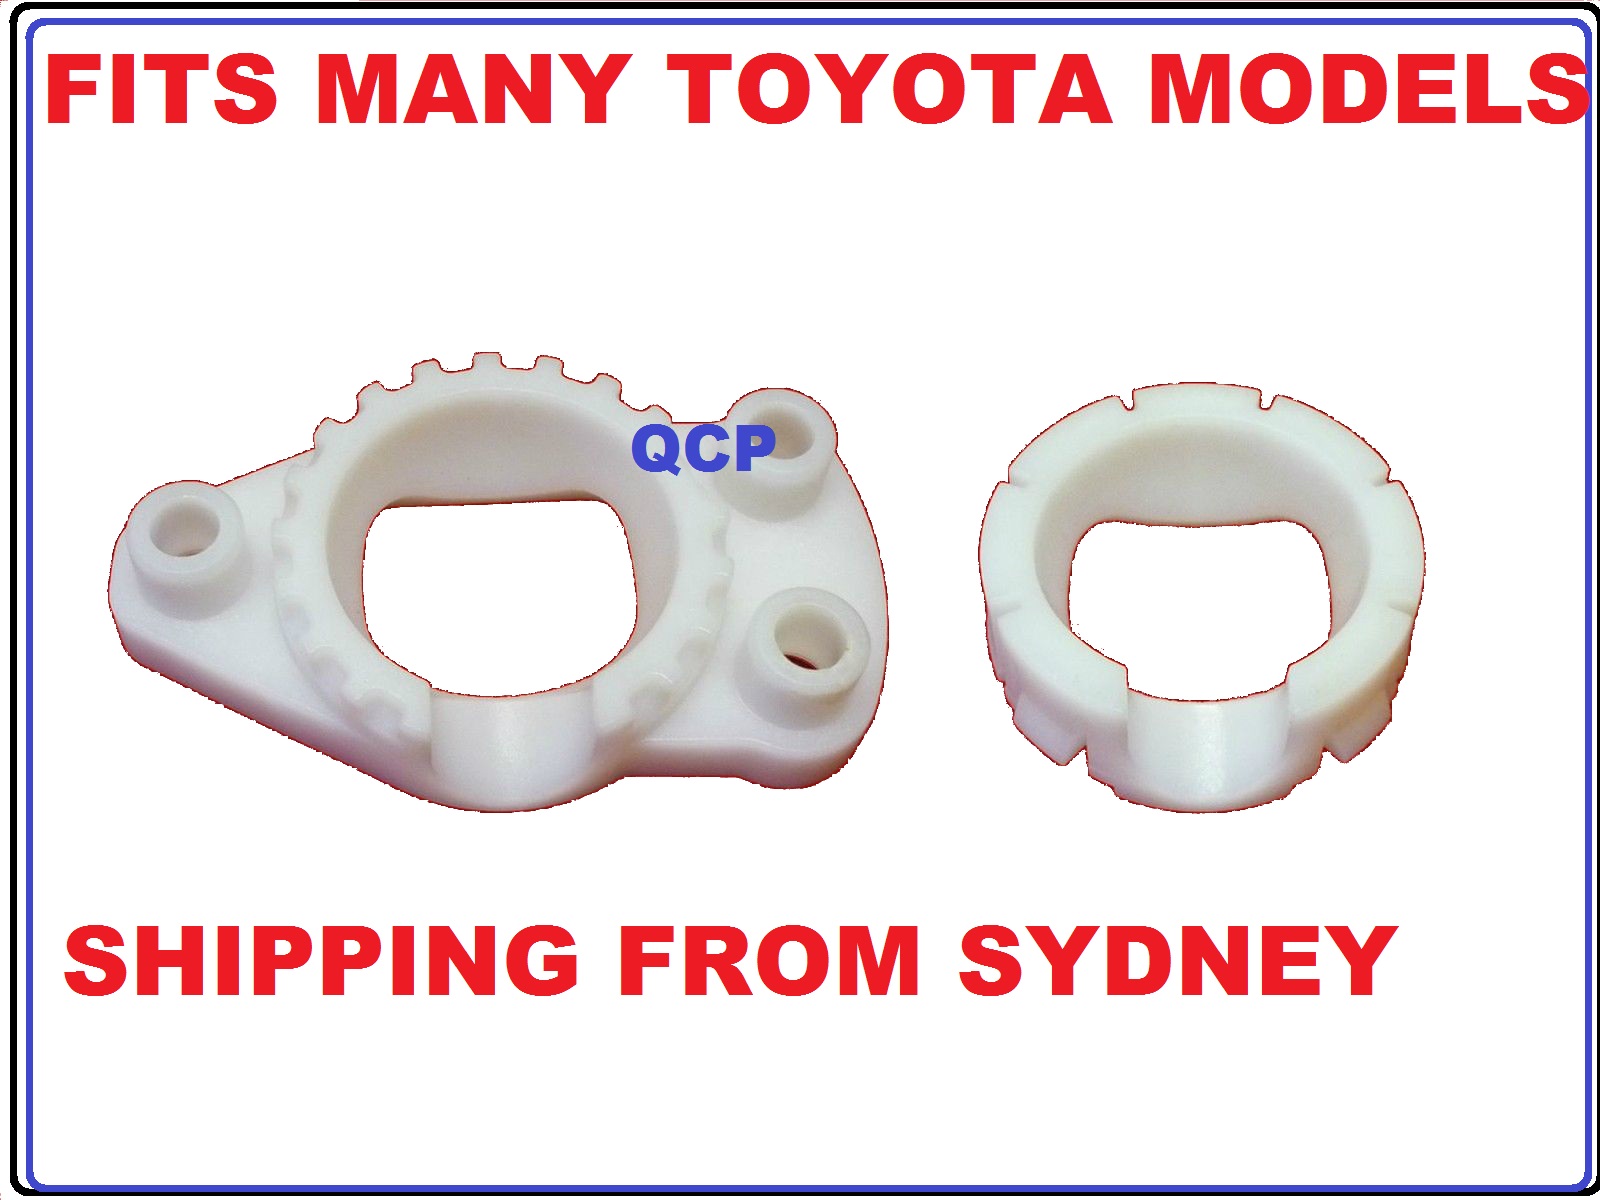 Gear linkage selector bush repair kit fit Toyota Aygo Avensis Cruiser Hilux etc